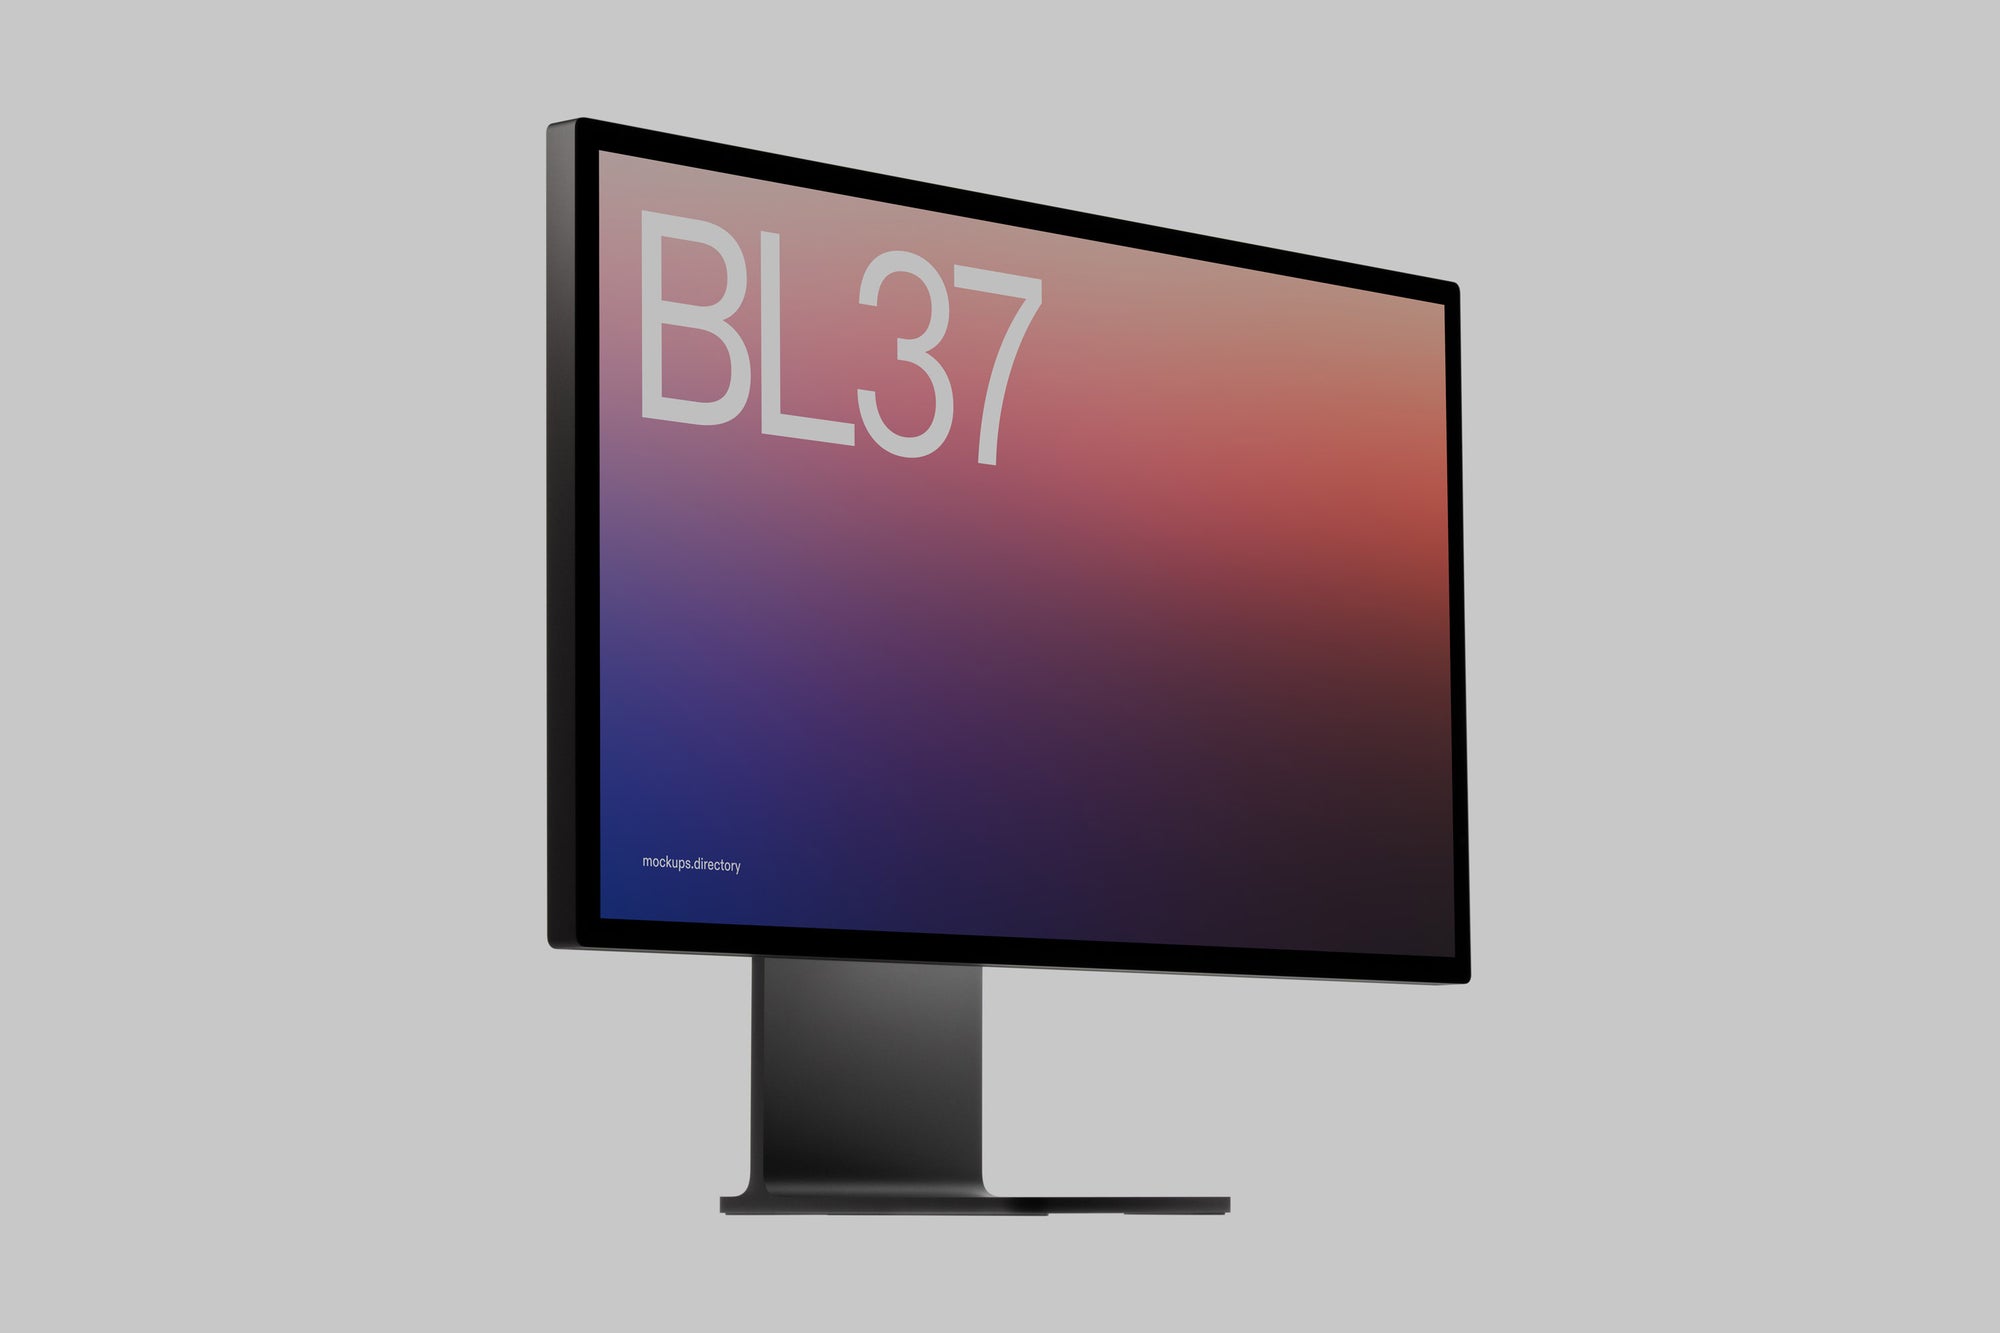 BL37 — Studio Display